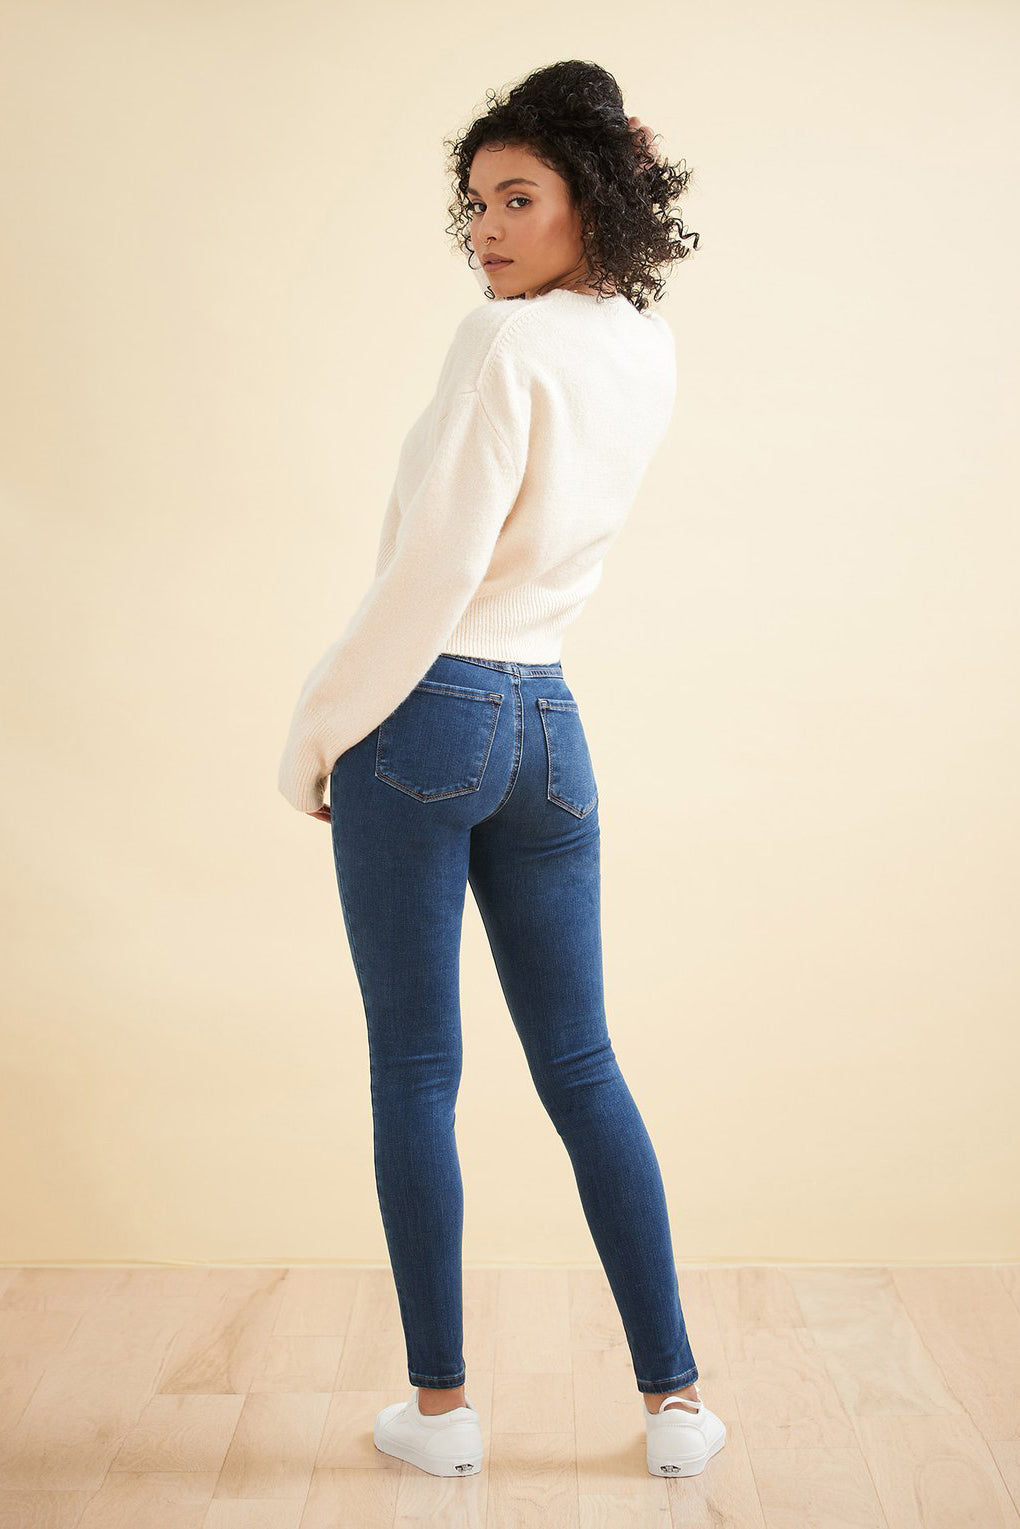 Athena - RACHEL Classic Rise Skinny Jeans